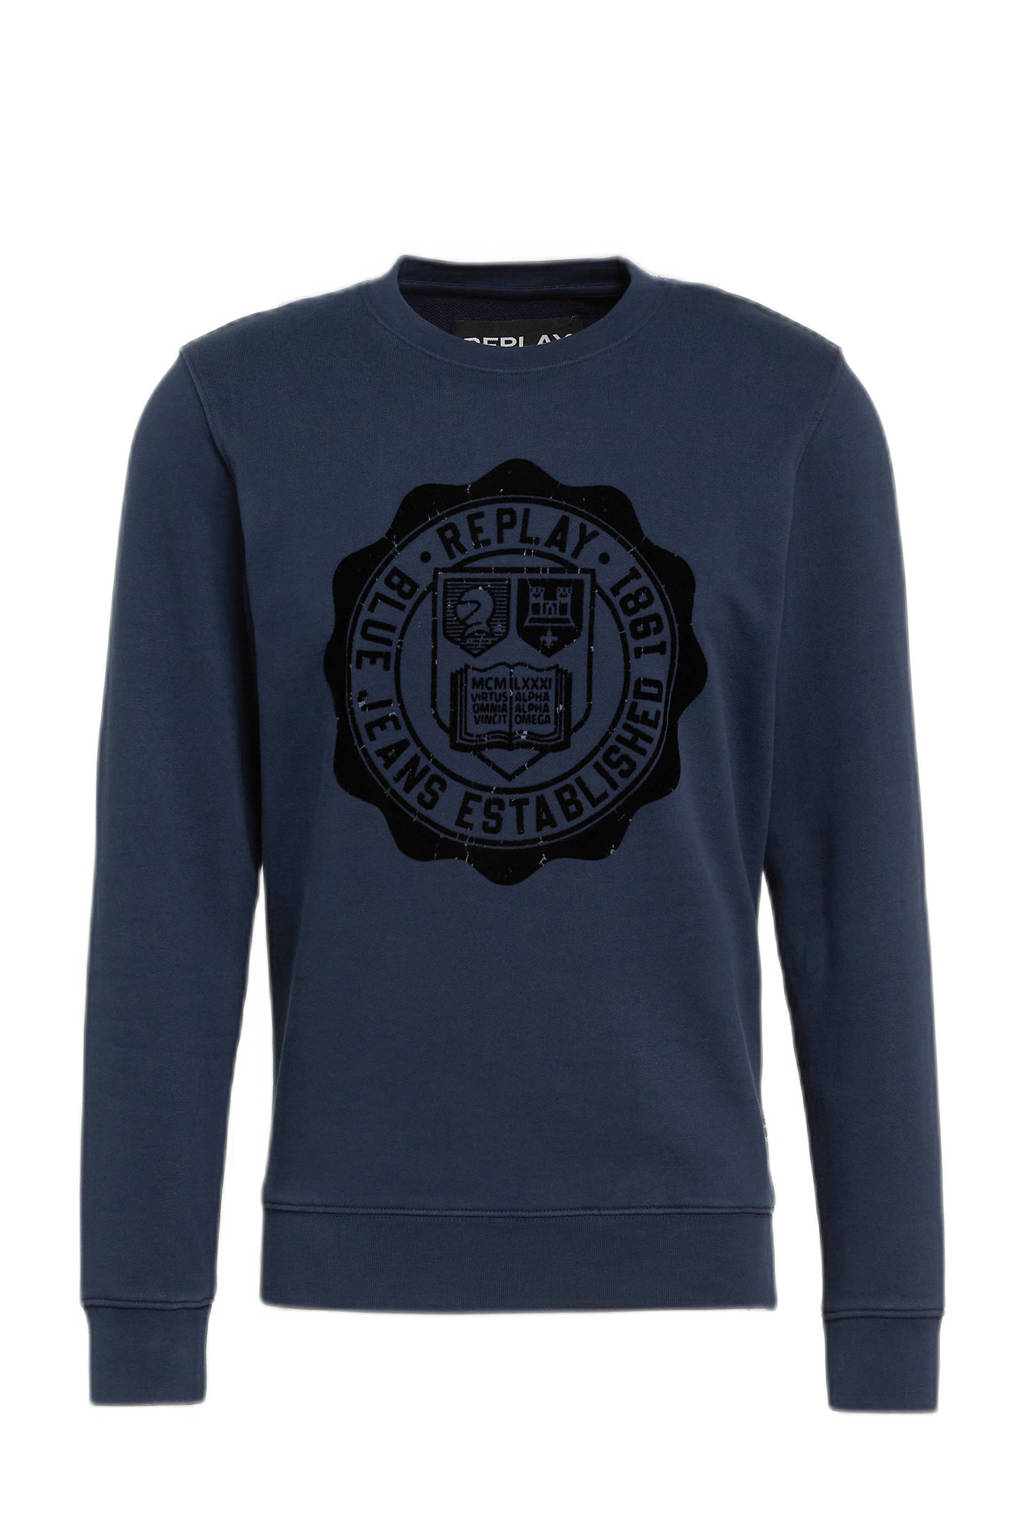 REPLAY sweater met logo donkerblauw